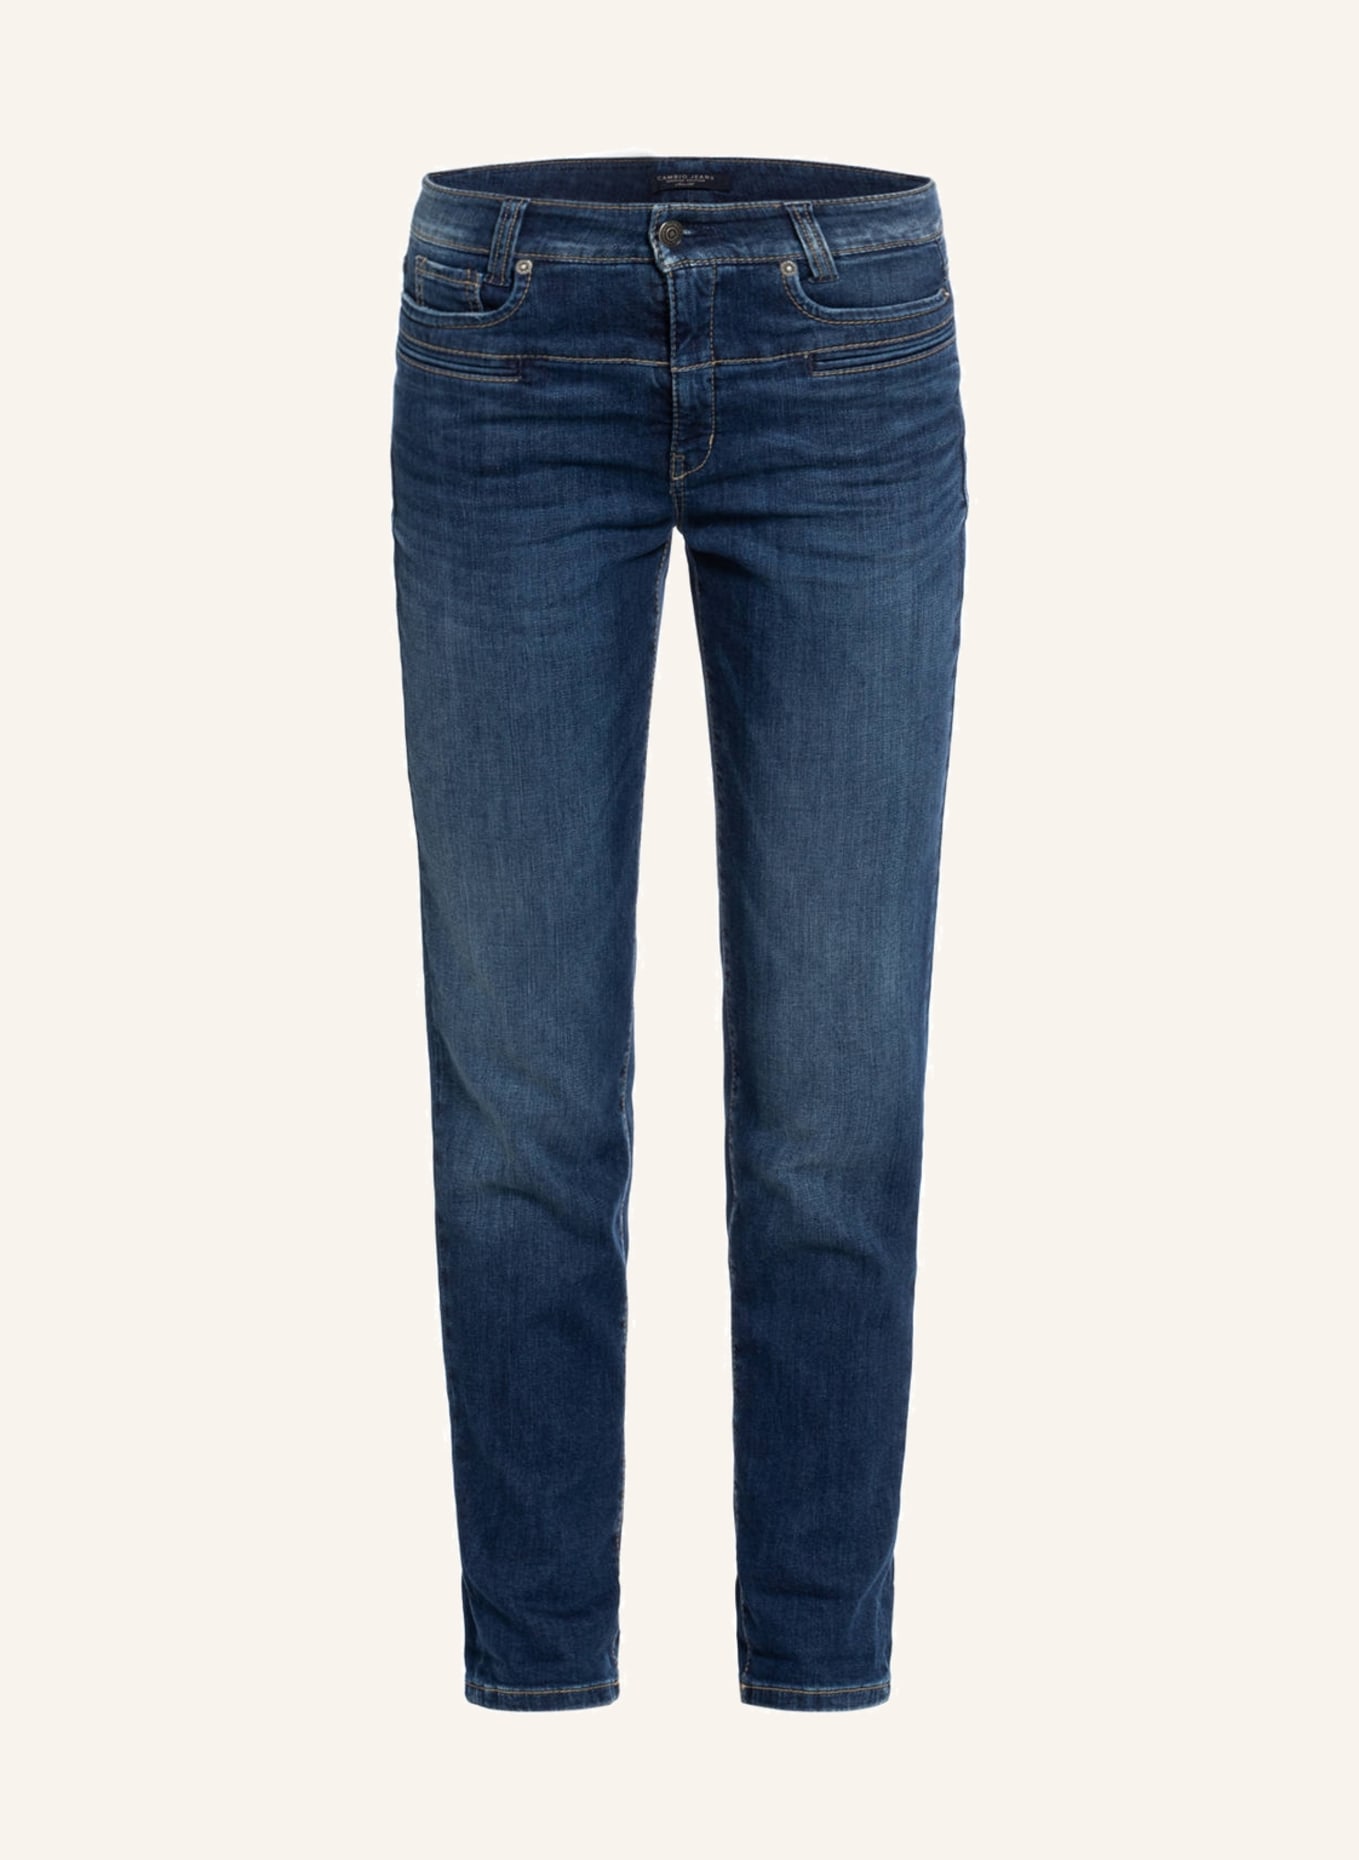 CAMBIO Jeans PEARLIE , Farbe: 5020 blau denim (Bild 1)